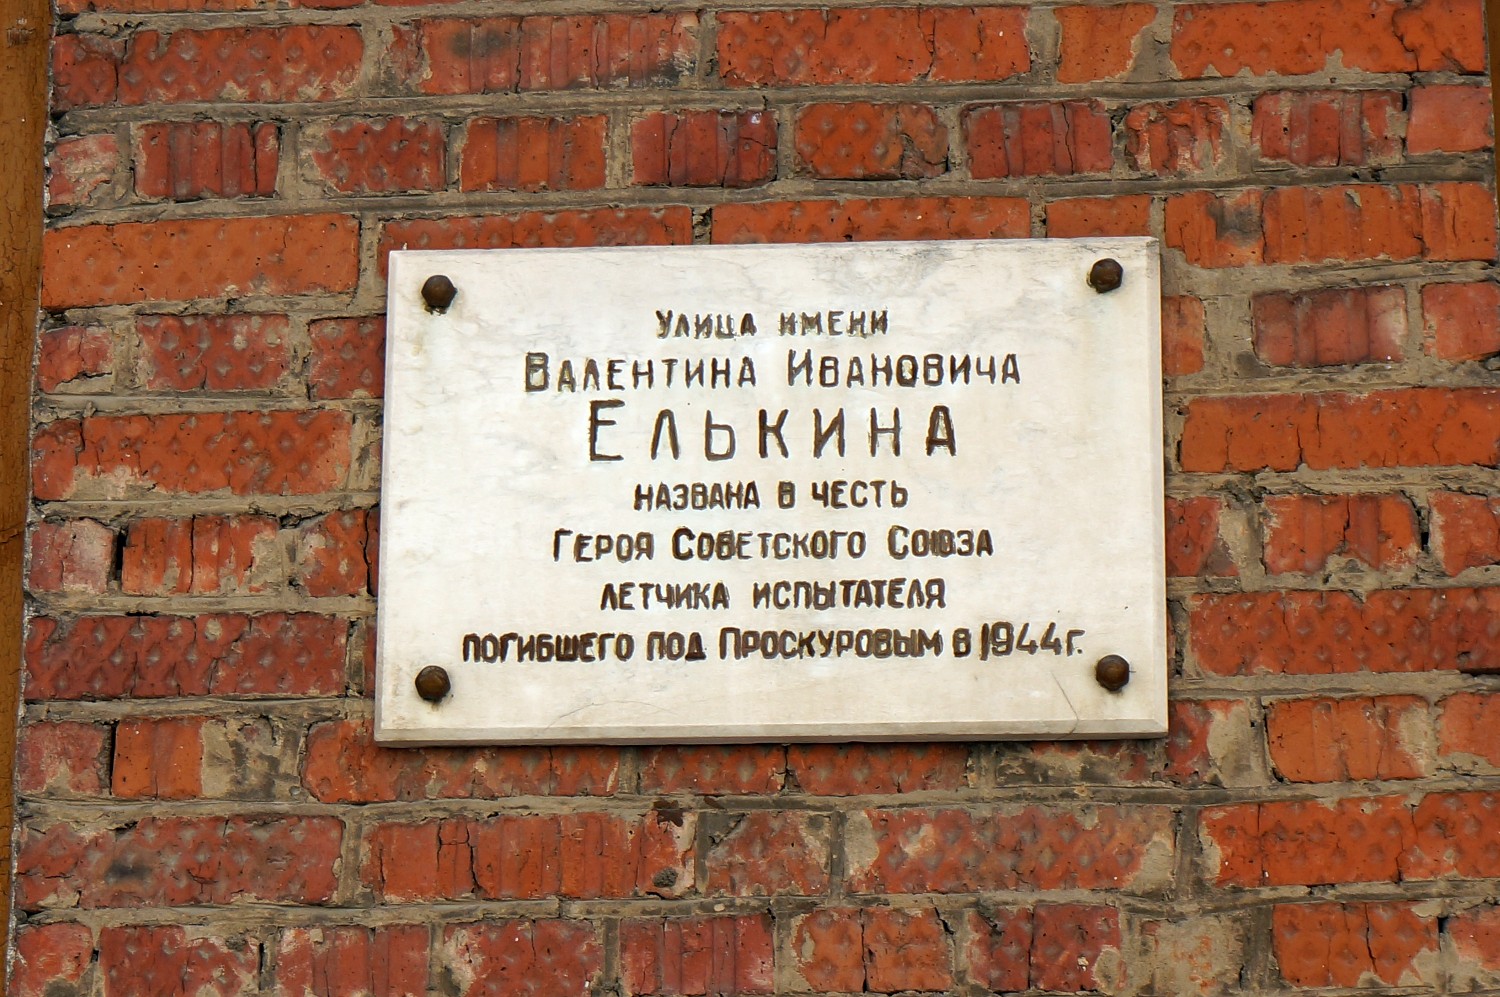 Perm, Улица Елькина, 4. Perm — Memorial plaques